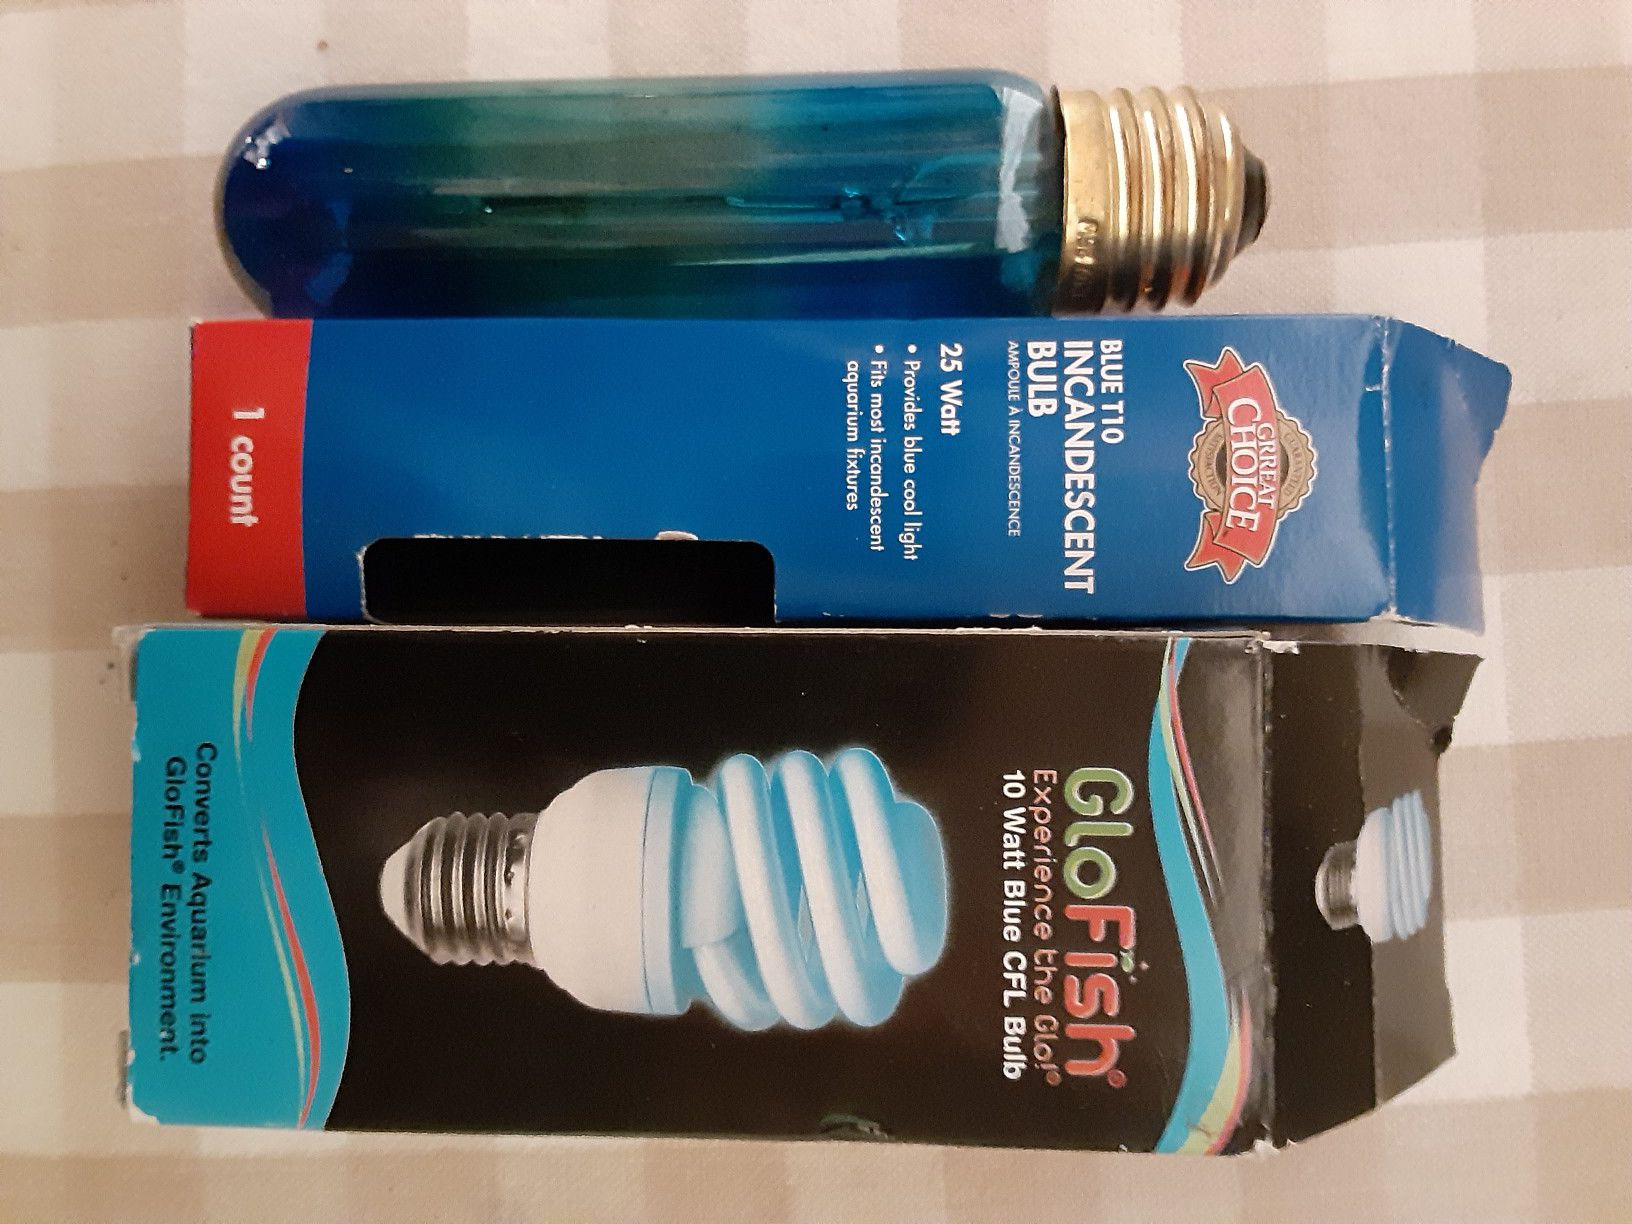 3 blue fish tank lightbulbs. Tested and good...